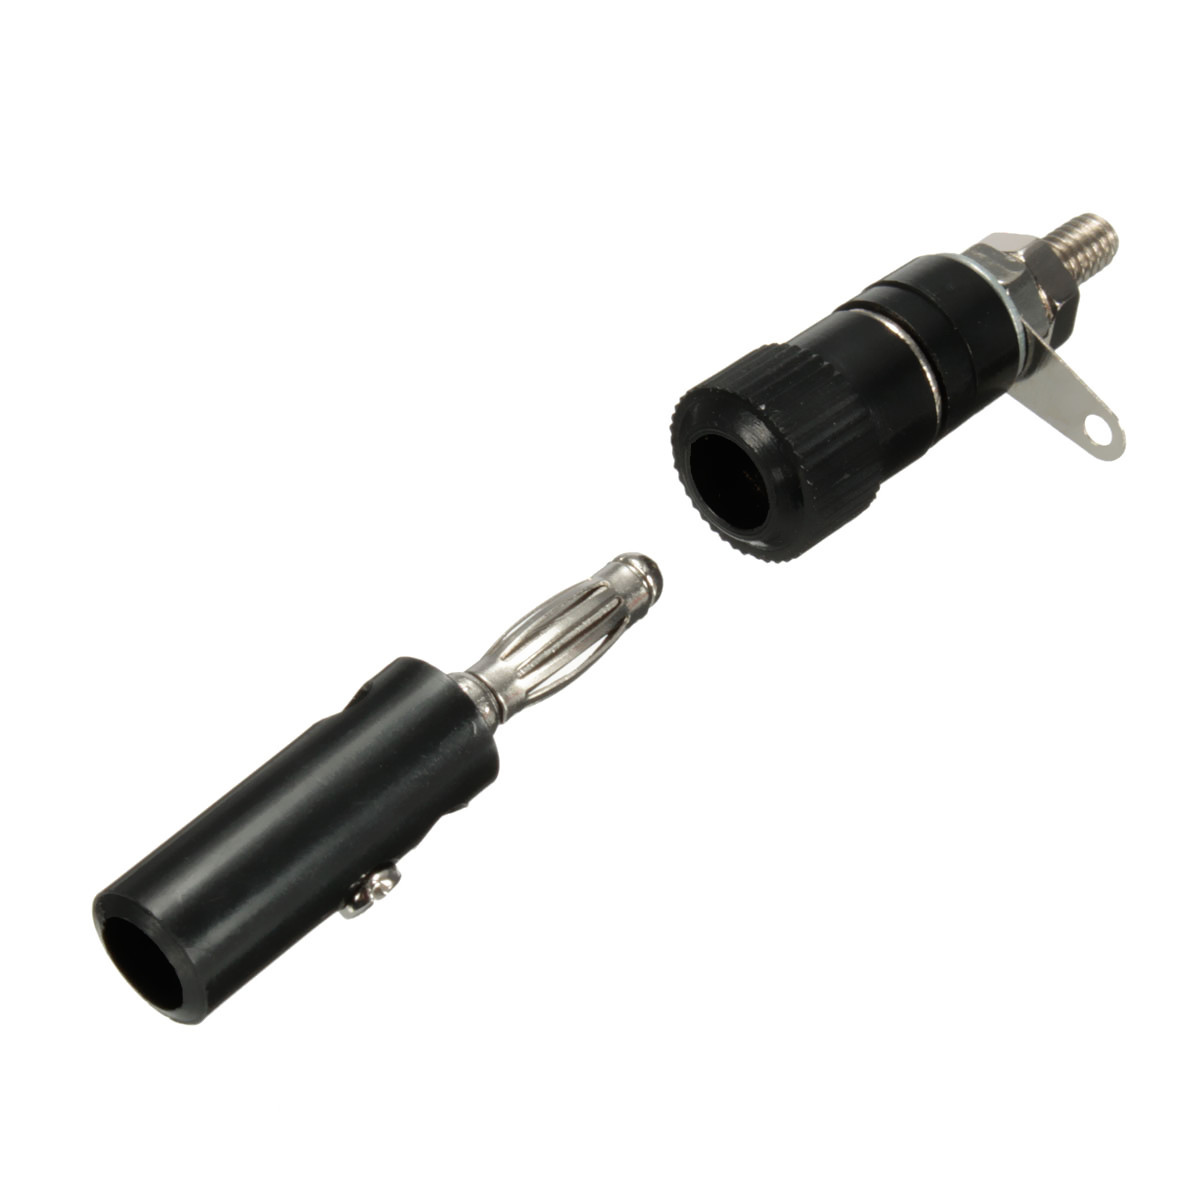 DANIU 50 Pairs 4mm Terminal Banana Plug Socket Jack Connectors Instrument Light Tools Black and Red